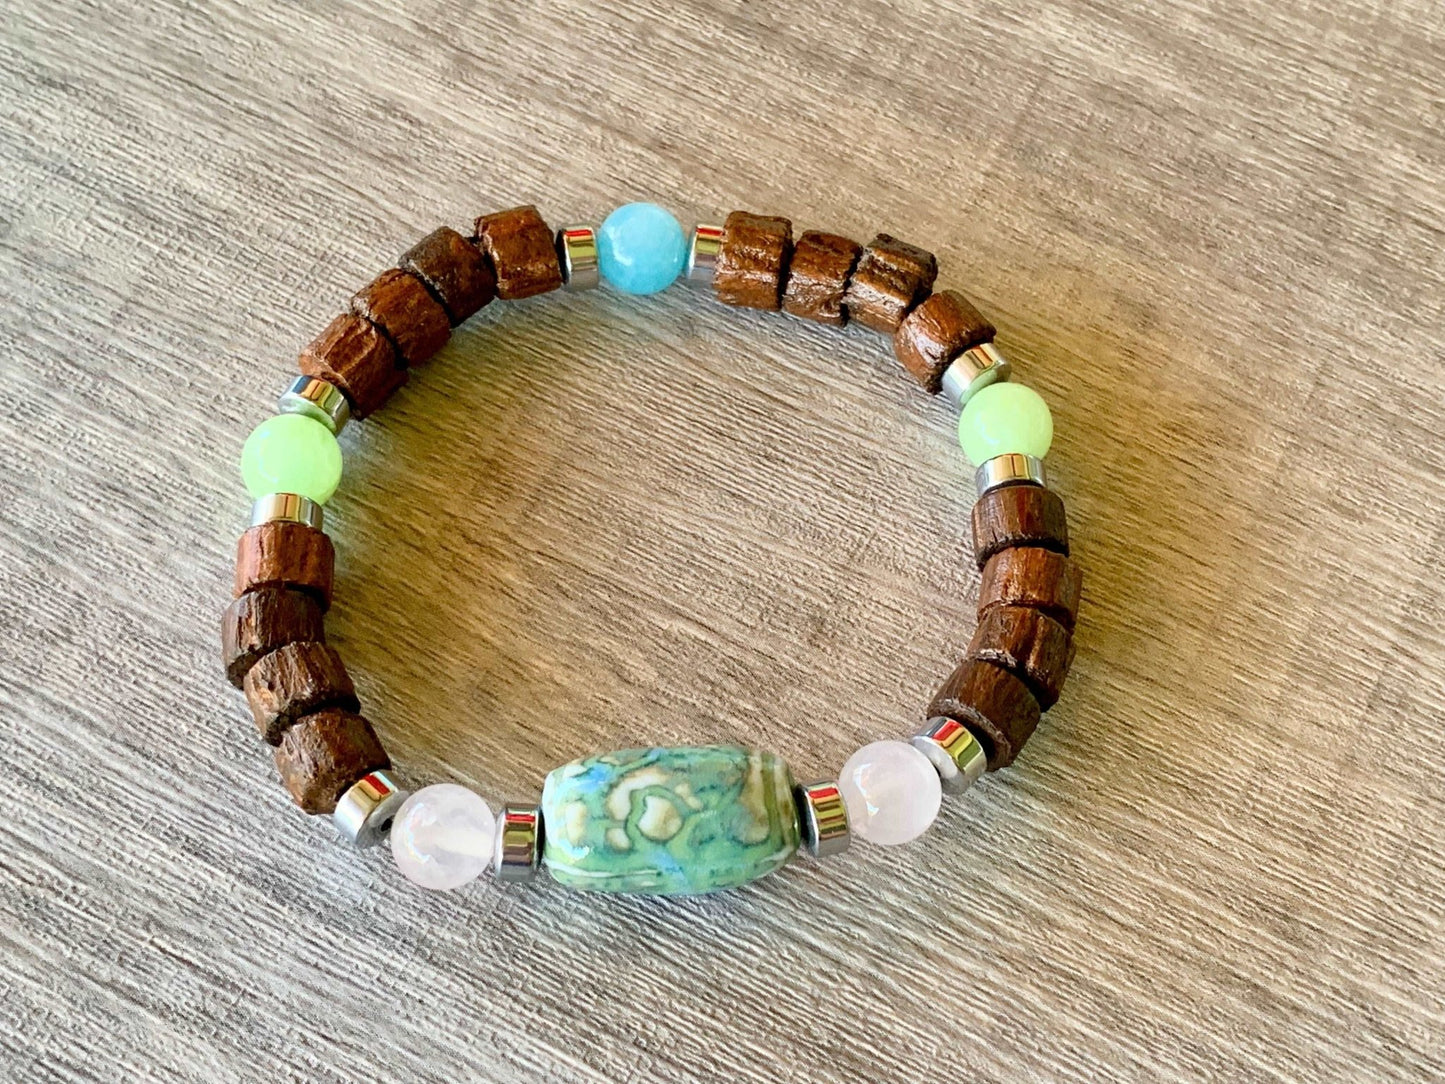 Edward Handmade Wood, Rose Quartz, Light Green Jade, Aquamarine, and Hematite Expandable Bracelet with a Ceramic Center Piece